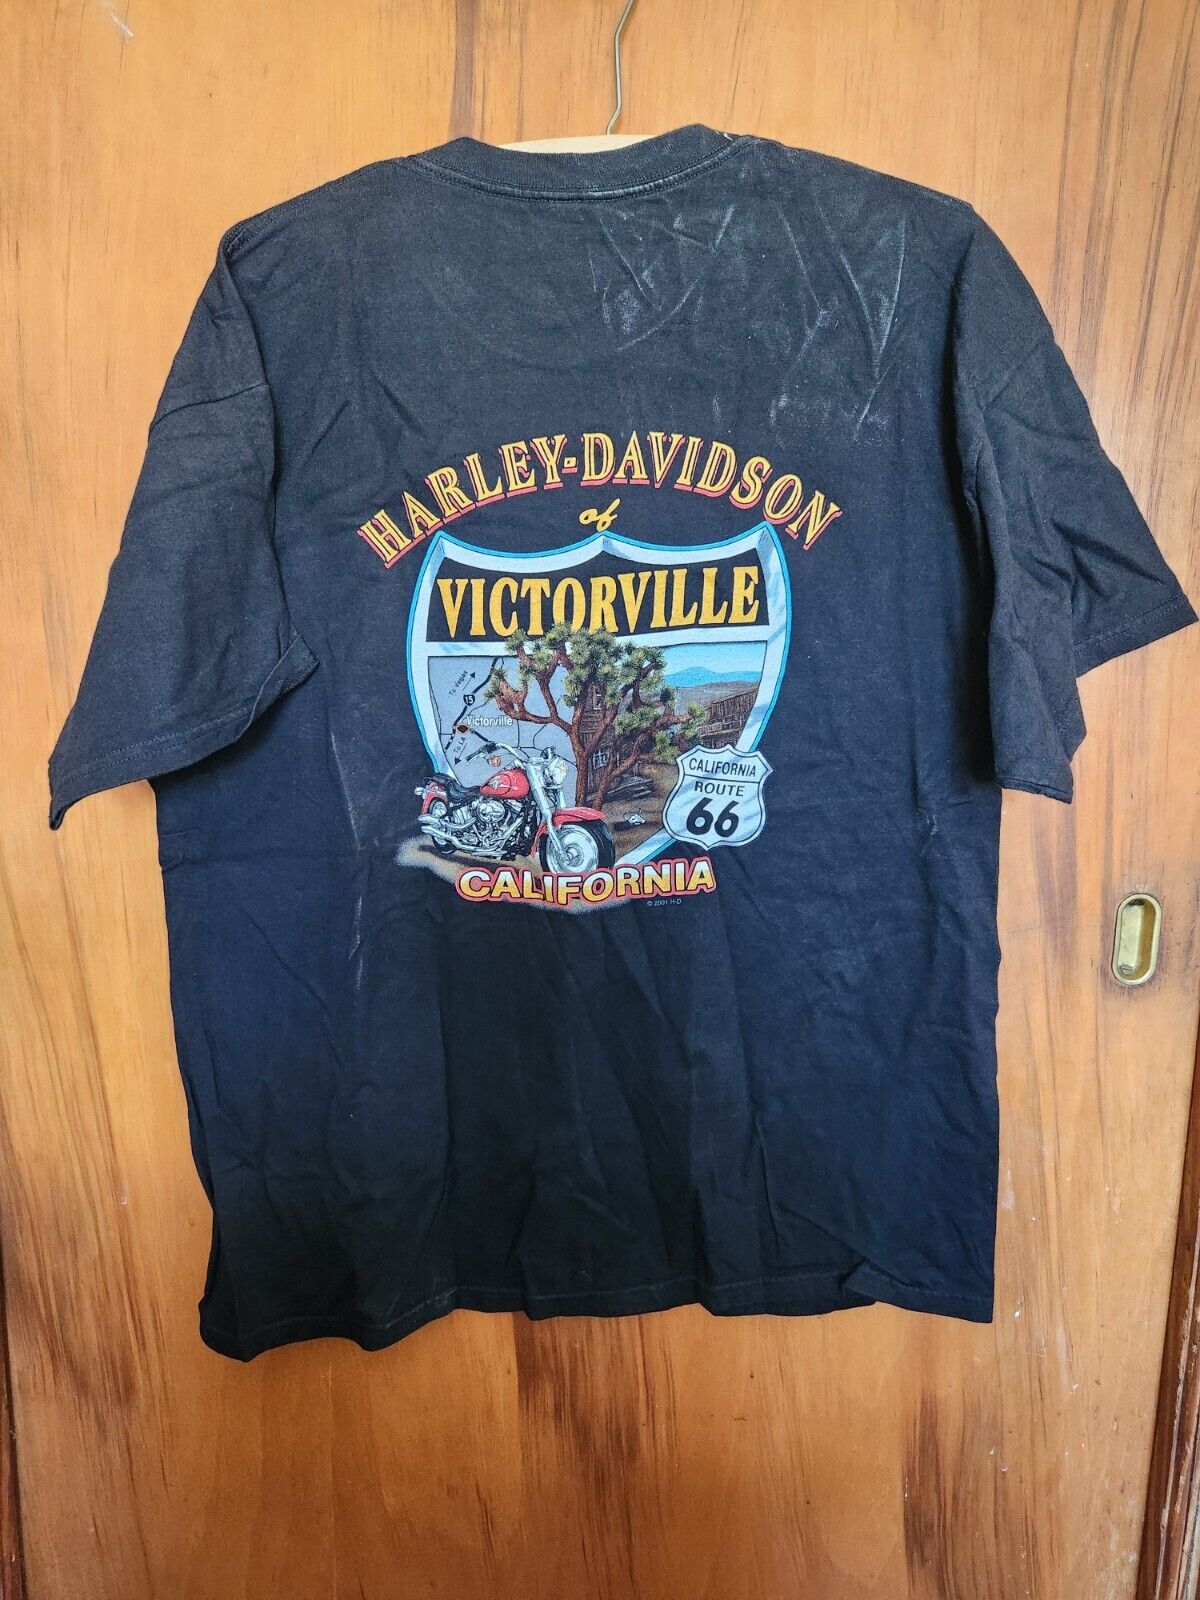 Vintage  Harley-Davidson XL T Shirt, black, Route 66, Victorville, California